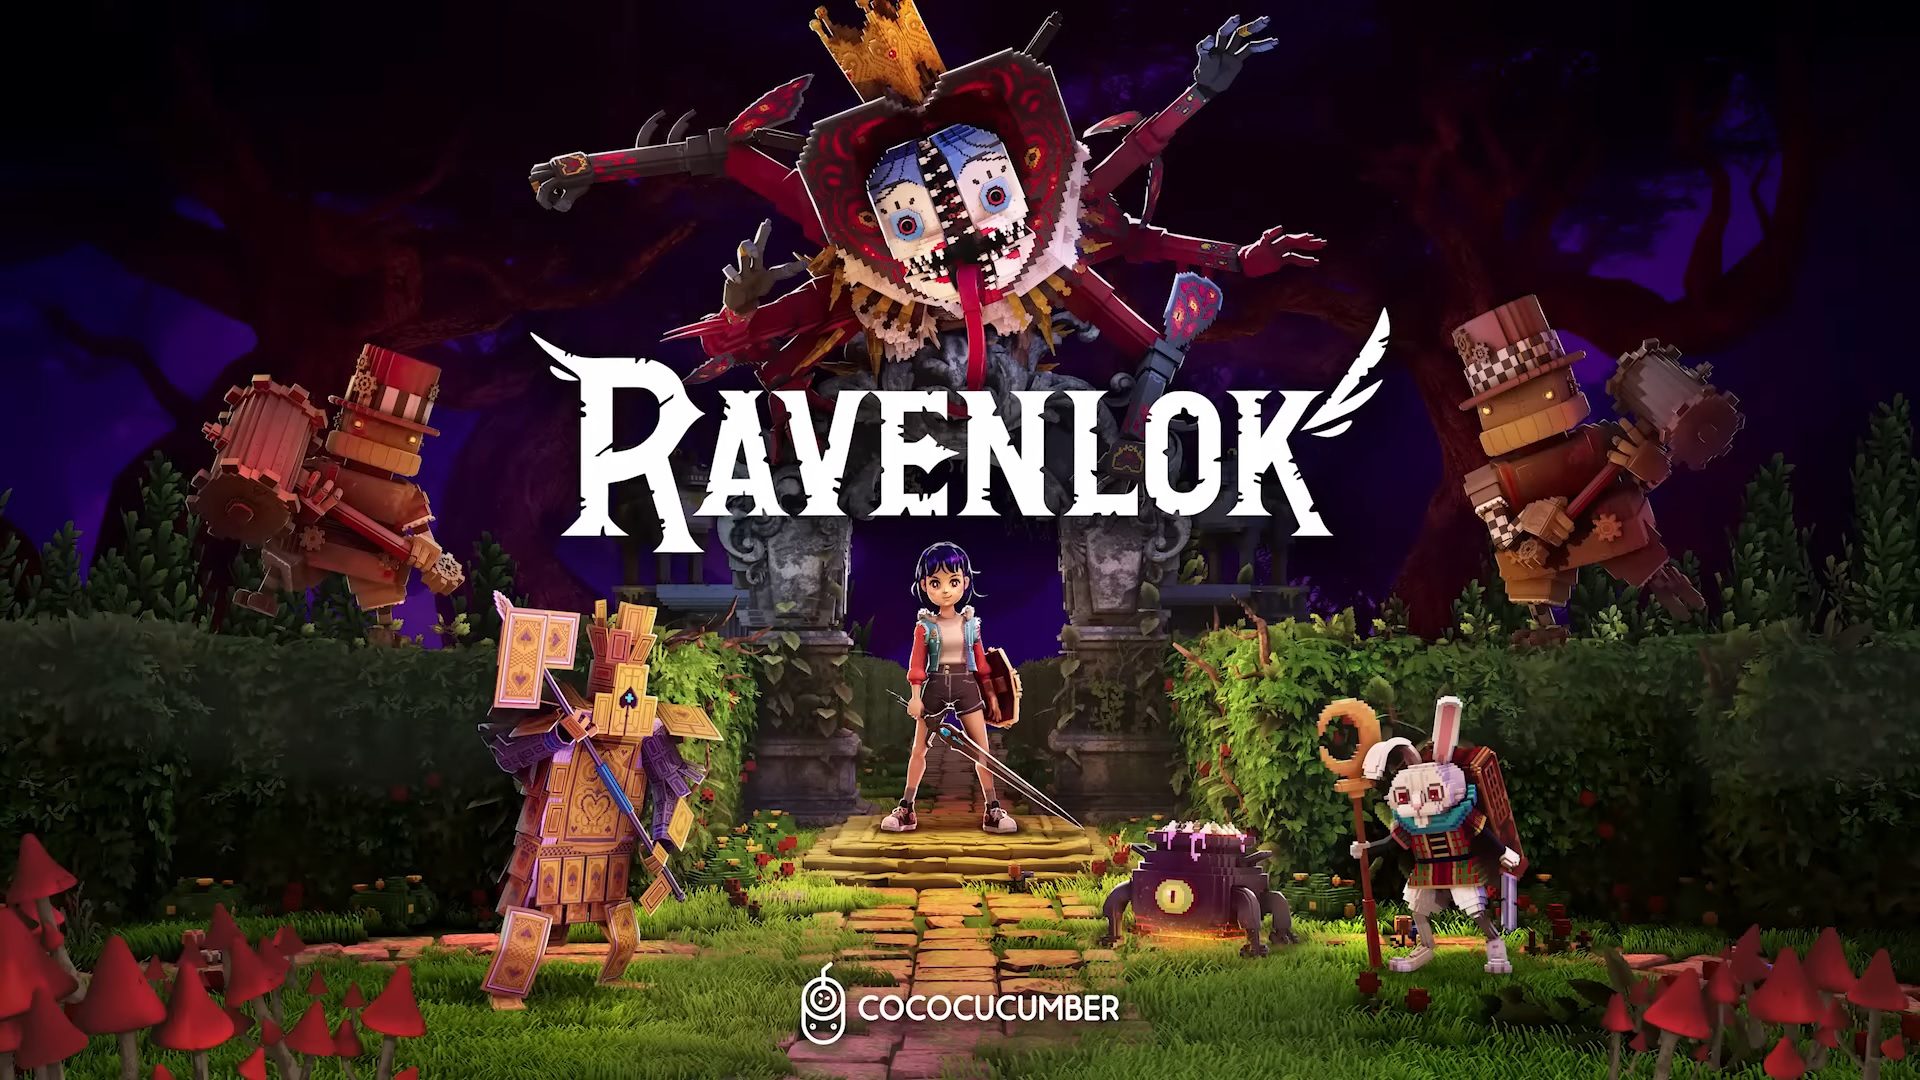 Release Date For Ravenlok Announced In All New Trailer - mxdwn Games